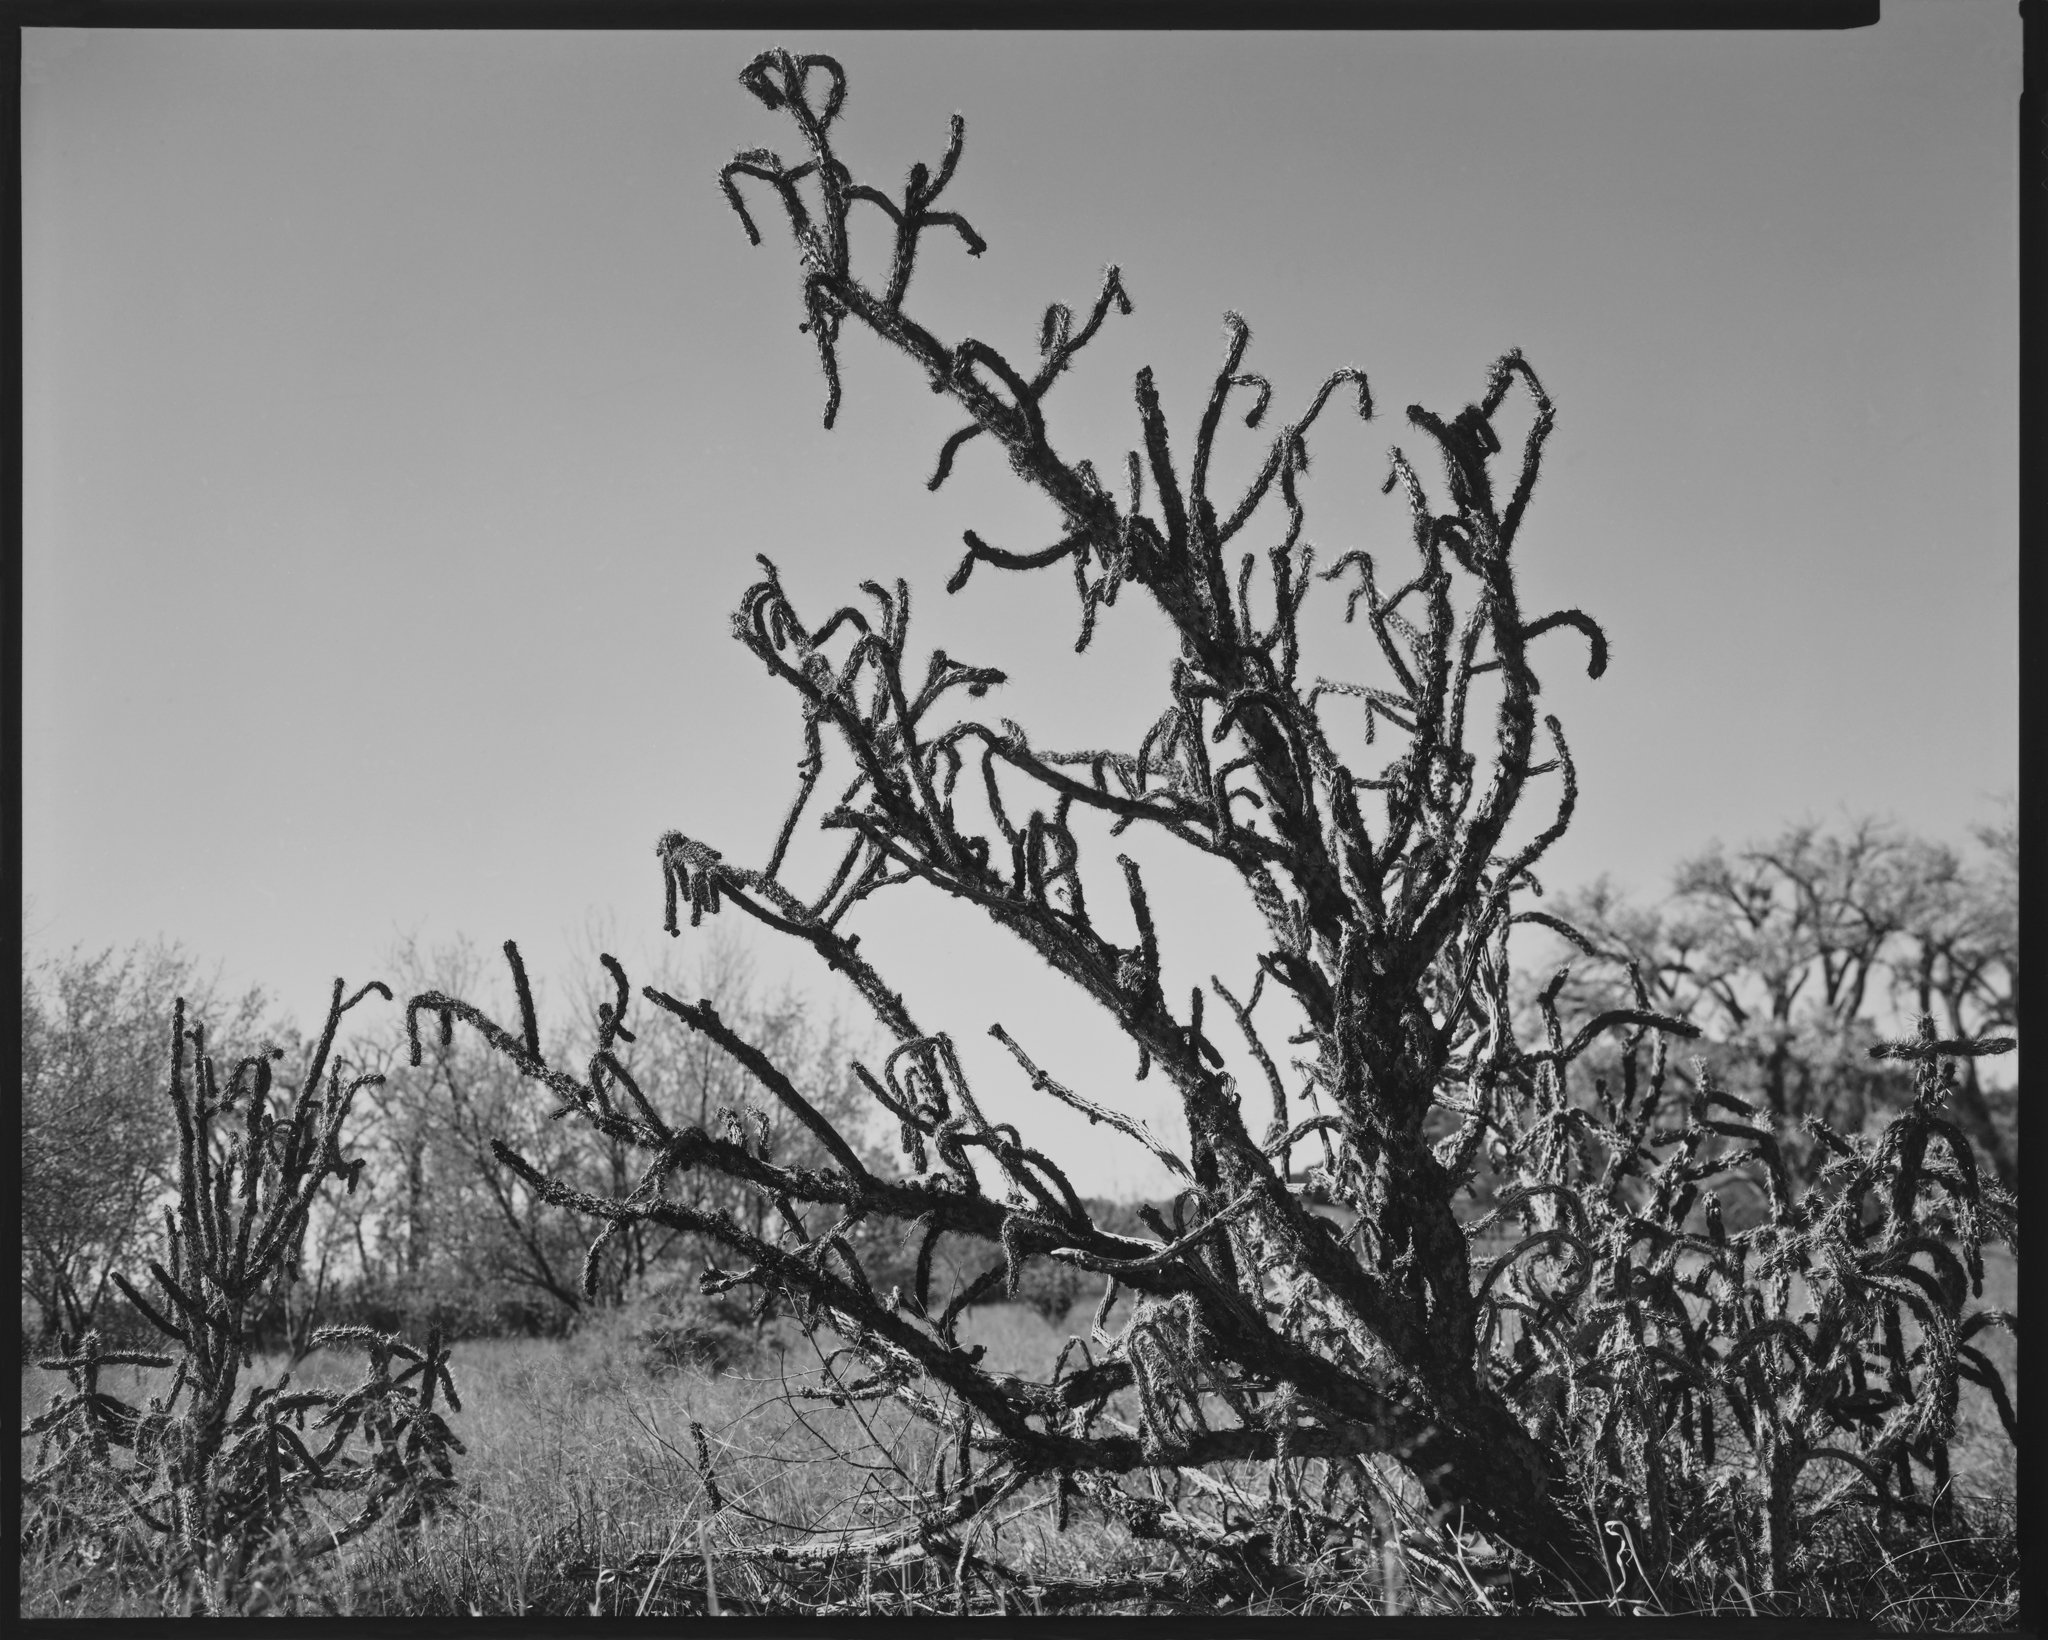 Cholla Portfolio_Cholla #17_Dying Cholla with New Growth, Galisteo, New Mexico_2013 © Nick Merrick.jpg